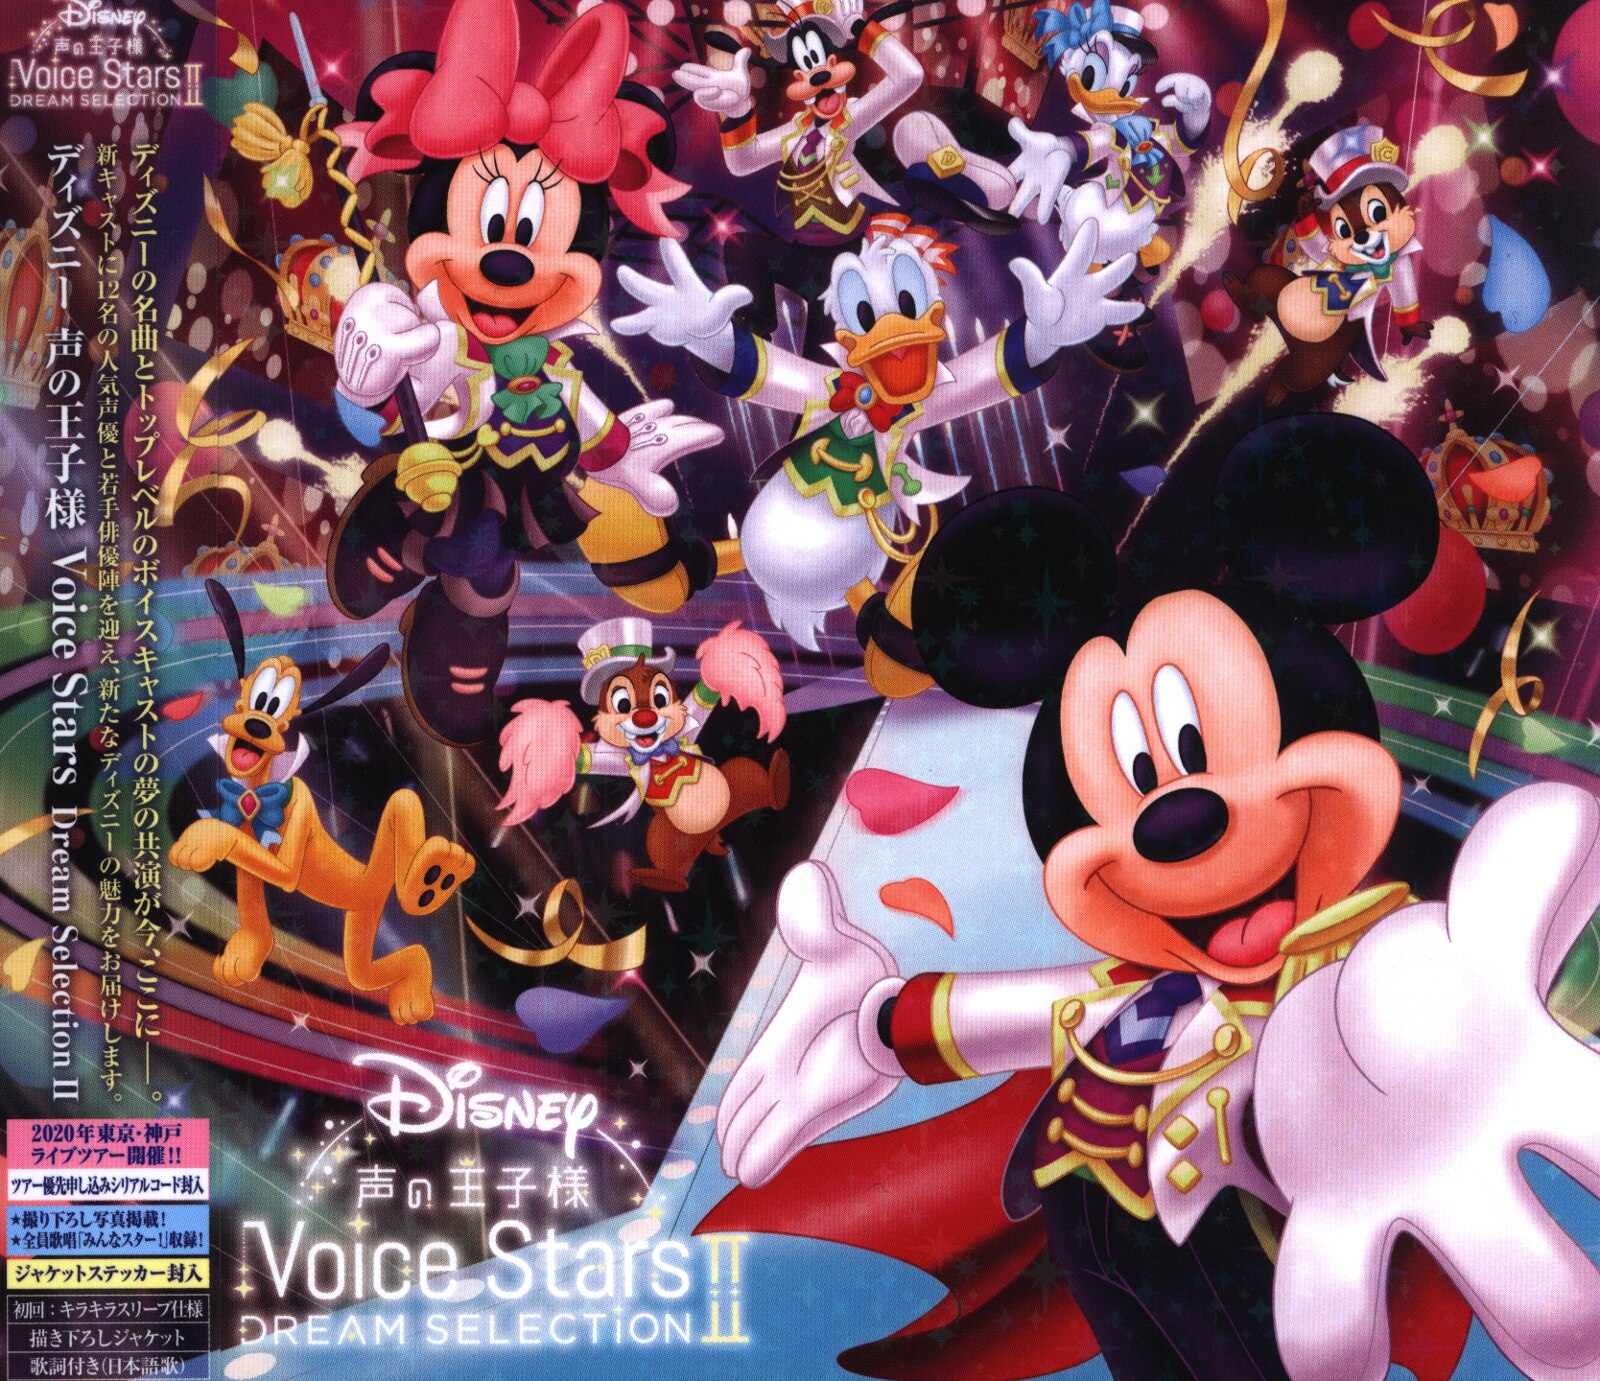 Disney Disney 声の王子様 Voice Stars Dream Selection S まんだらけ Mandarake